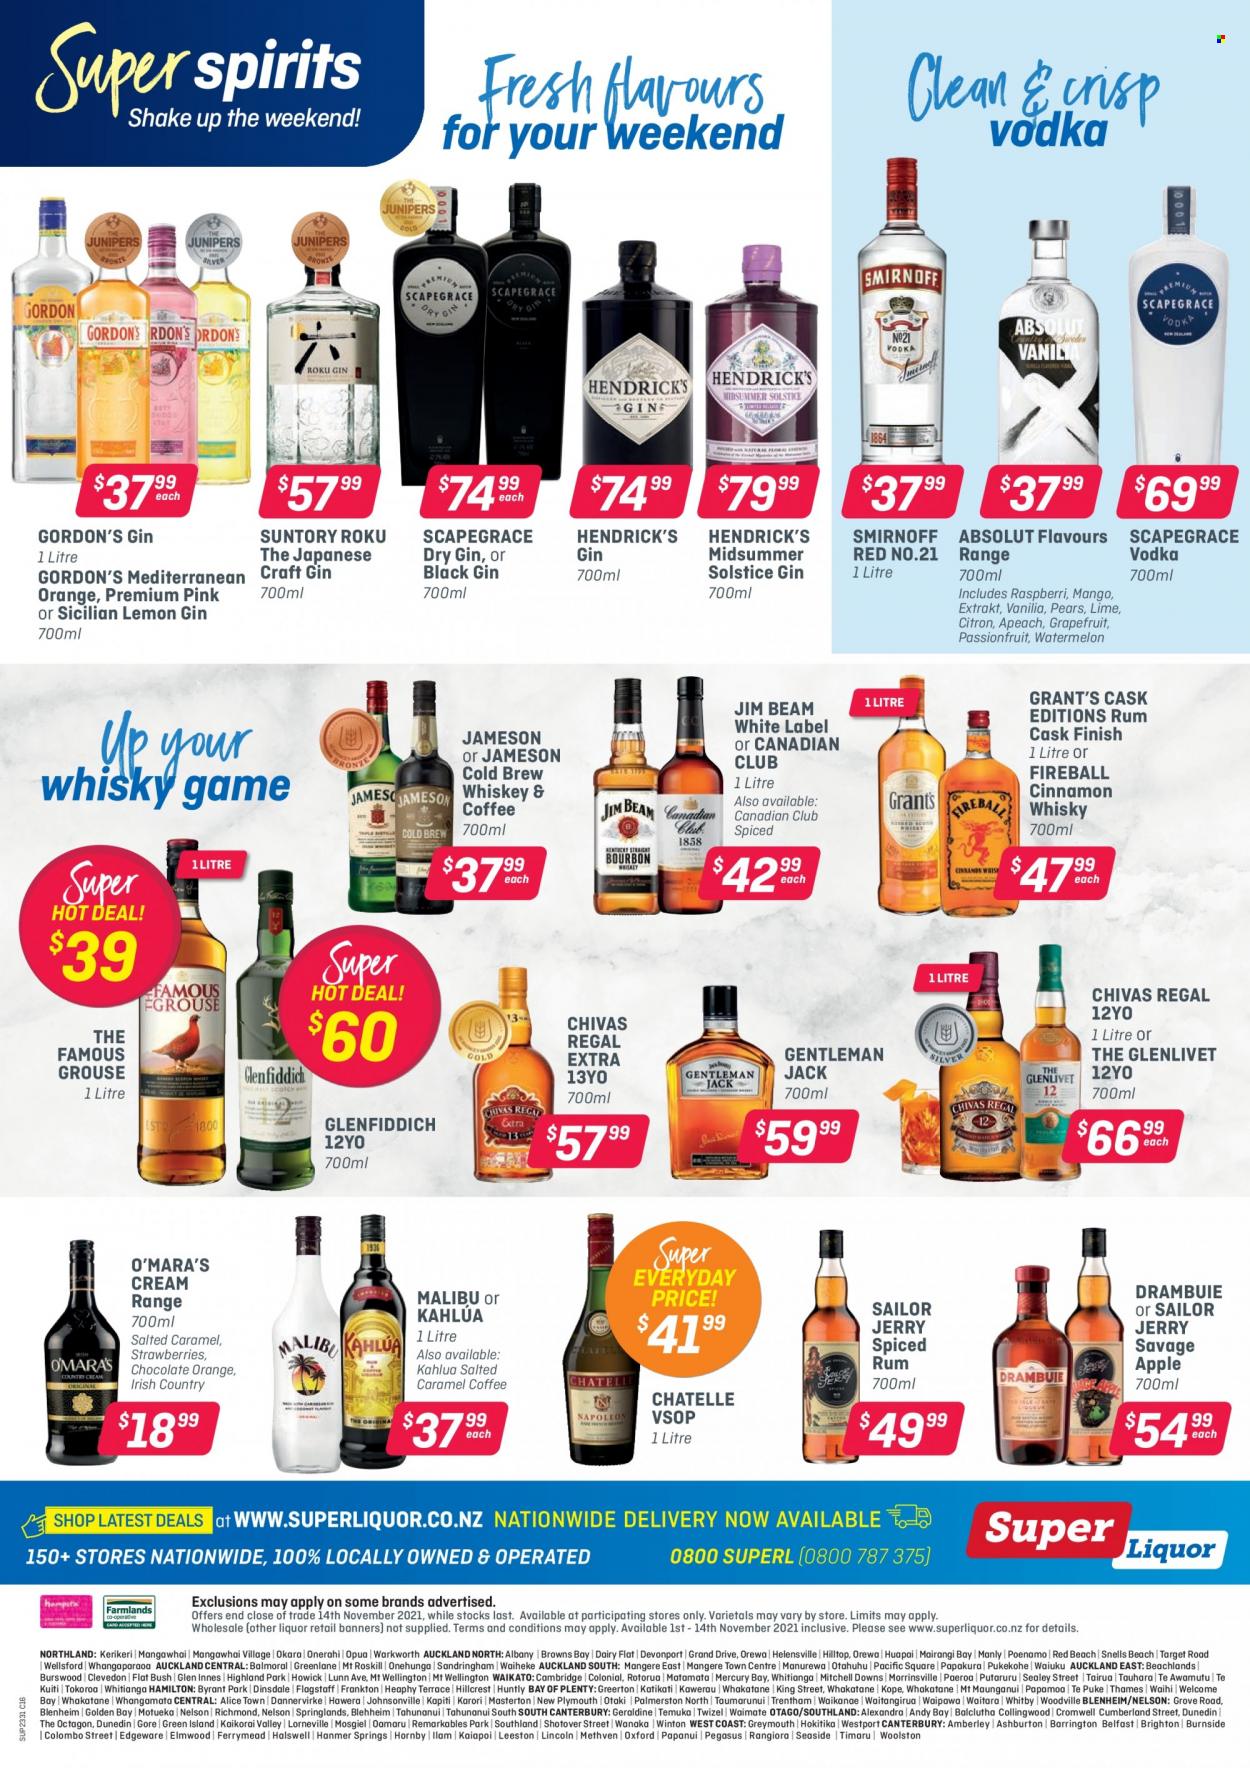 thumbnail - Super Liquor mailer - 01.11.2021 - 14.11.2021 - Sales products - coffee, Kahlúa, Drambuie, gin, rum, Smirnoff, spiced rum, vodka, whiskey, Jameson, liquor, Gordon's, Grant's, Absolut, Chivas Regal, Malibu, Glenfiddich, The Famous Grouse, Jim Beam, cinnamon whisky, Hendrick's, whisky. Page 12.